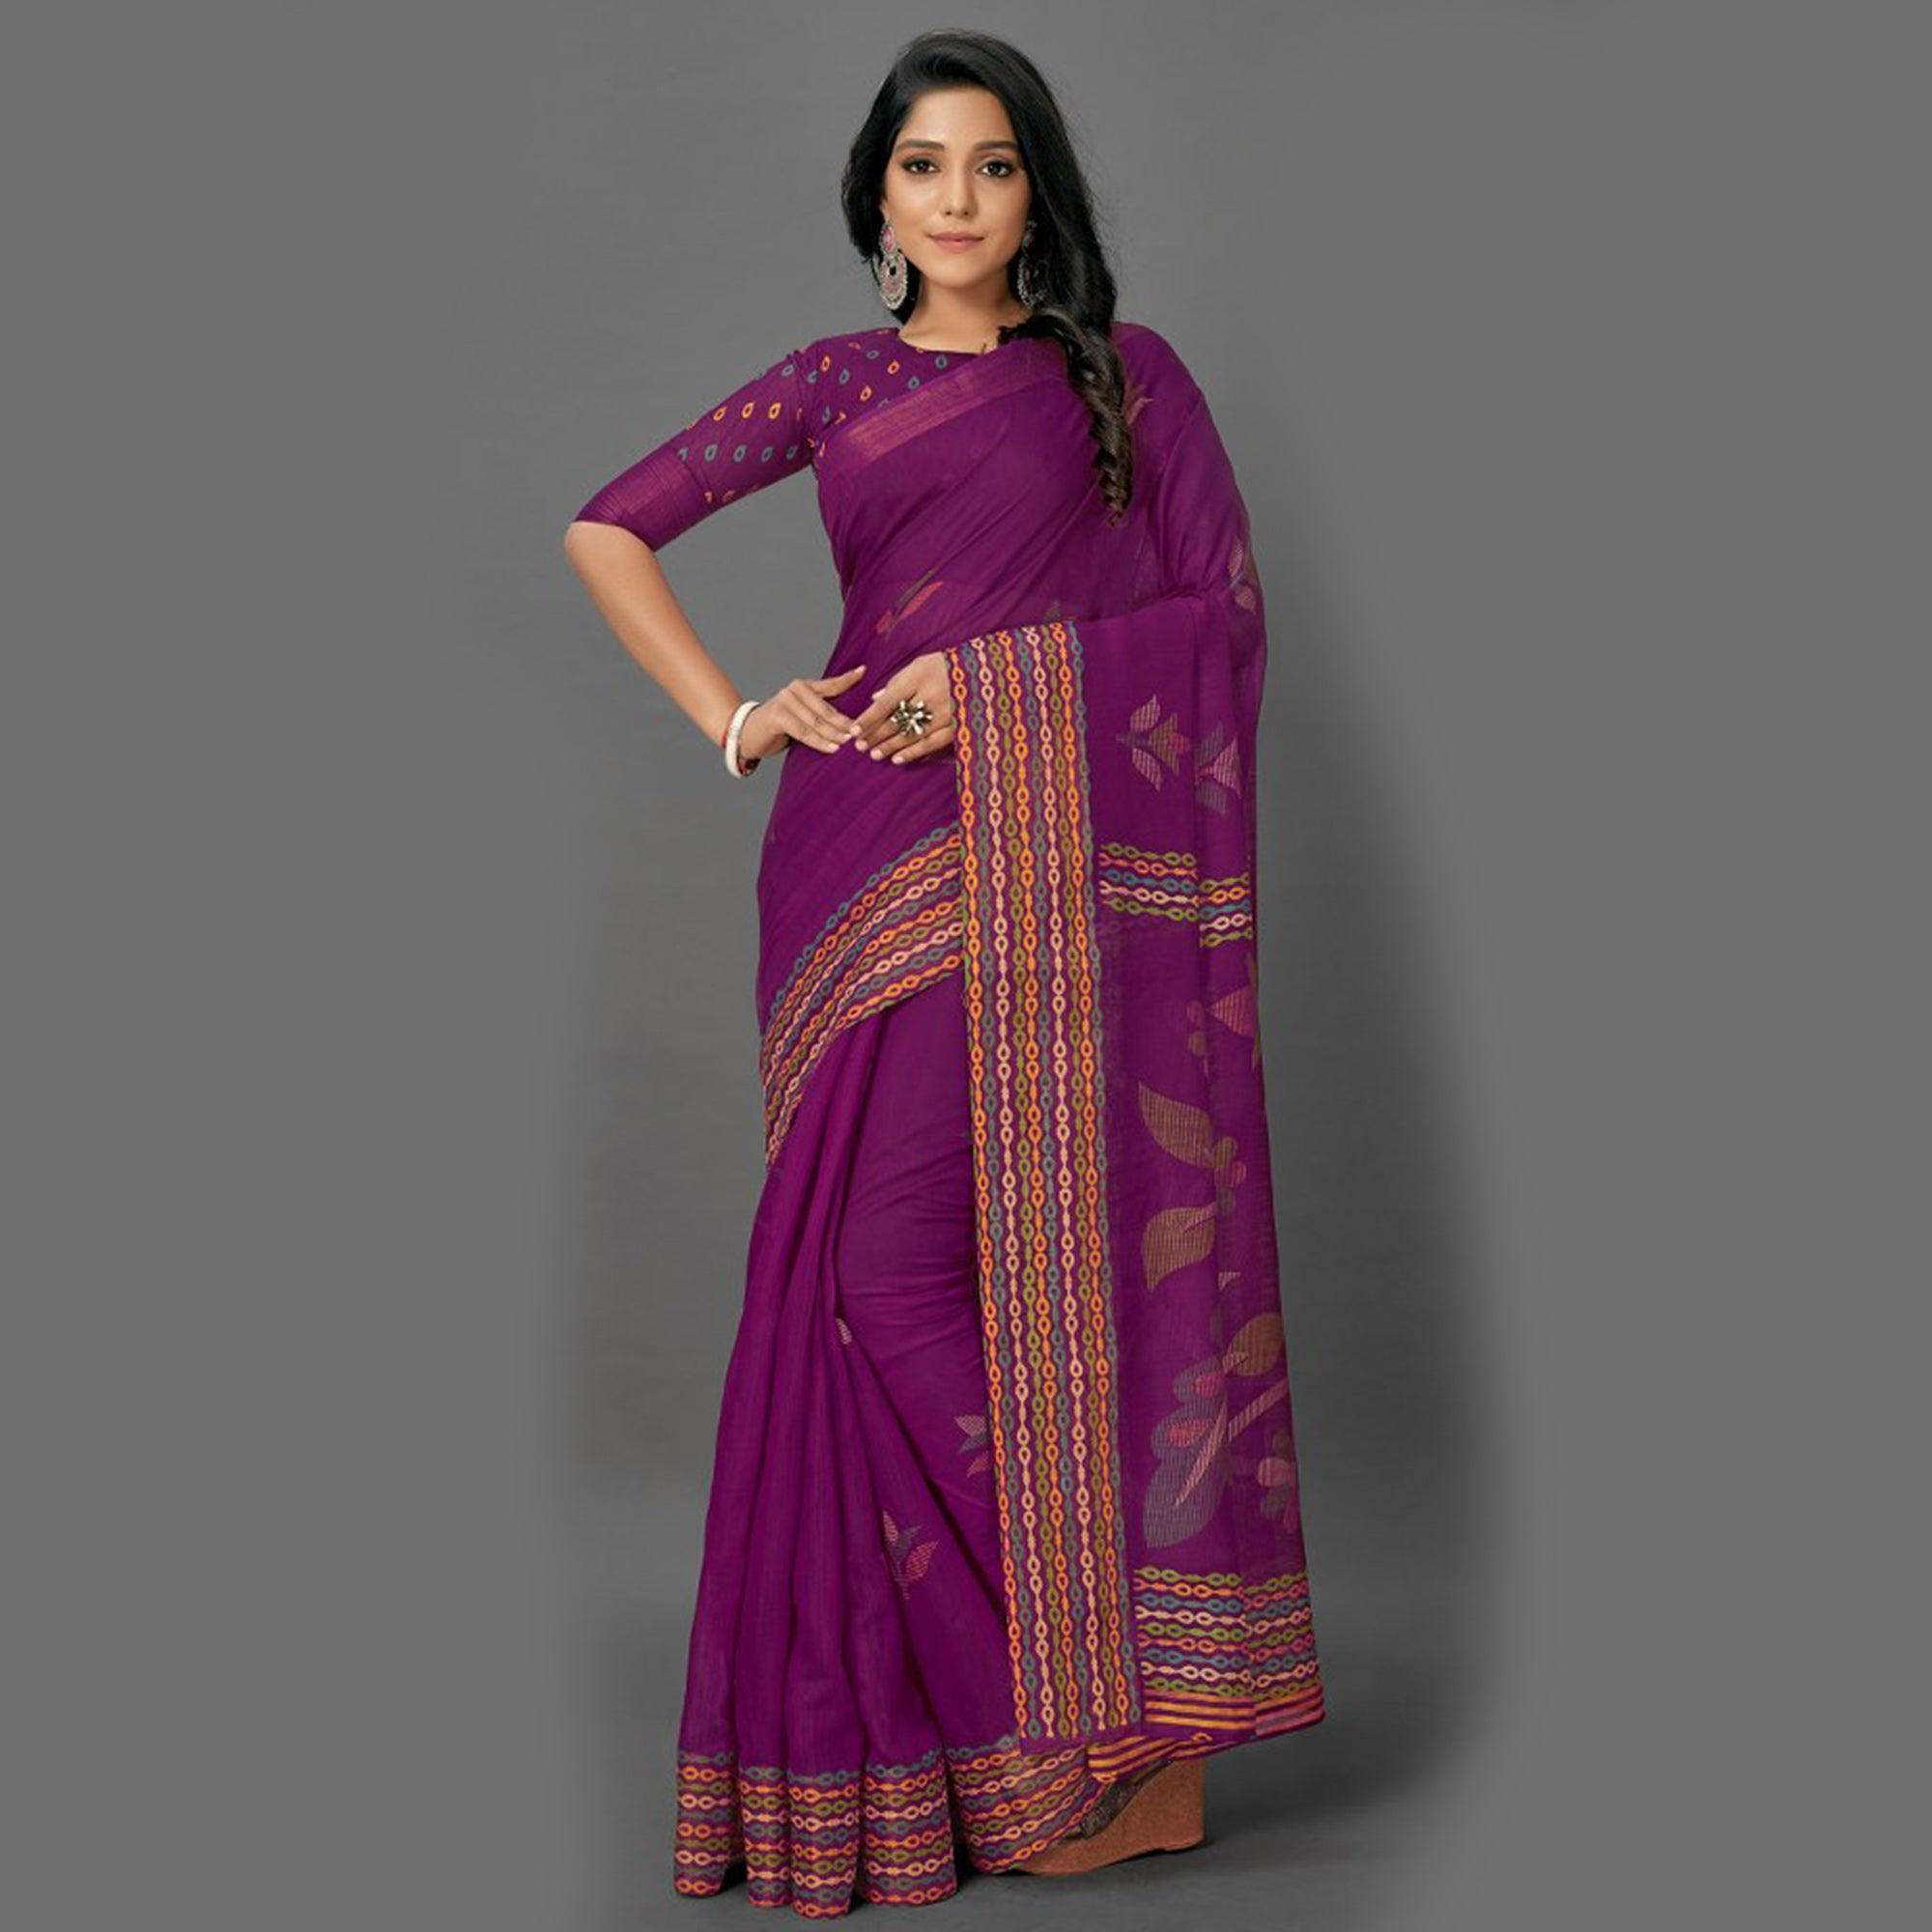 Marvellous Purple Colored Casual Wear Printed Cotton Saree - Peachmode